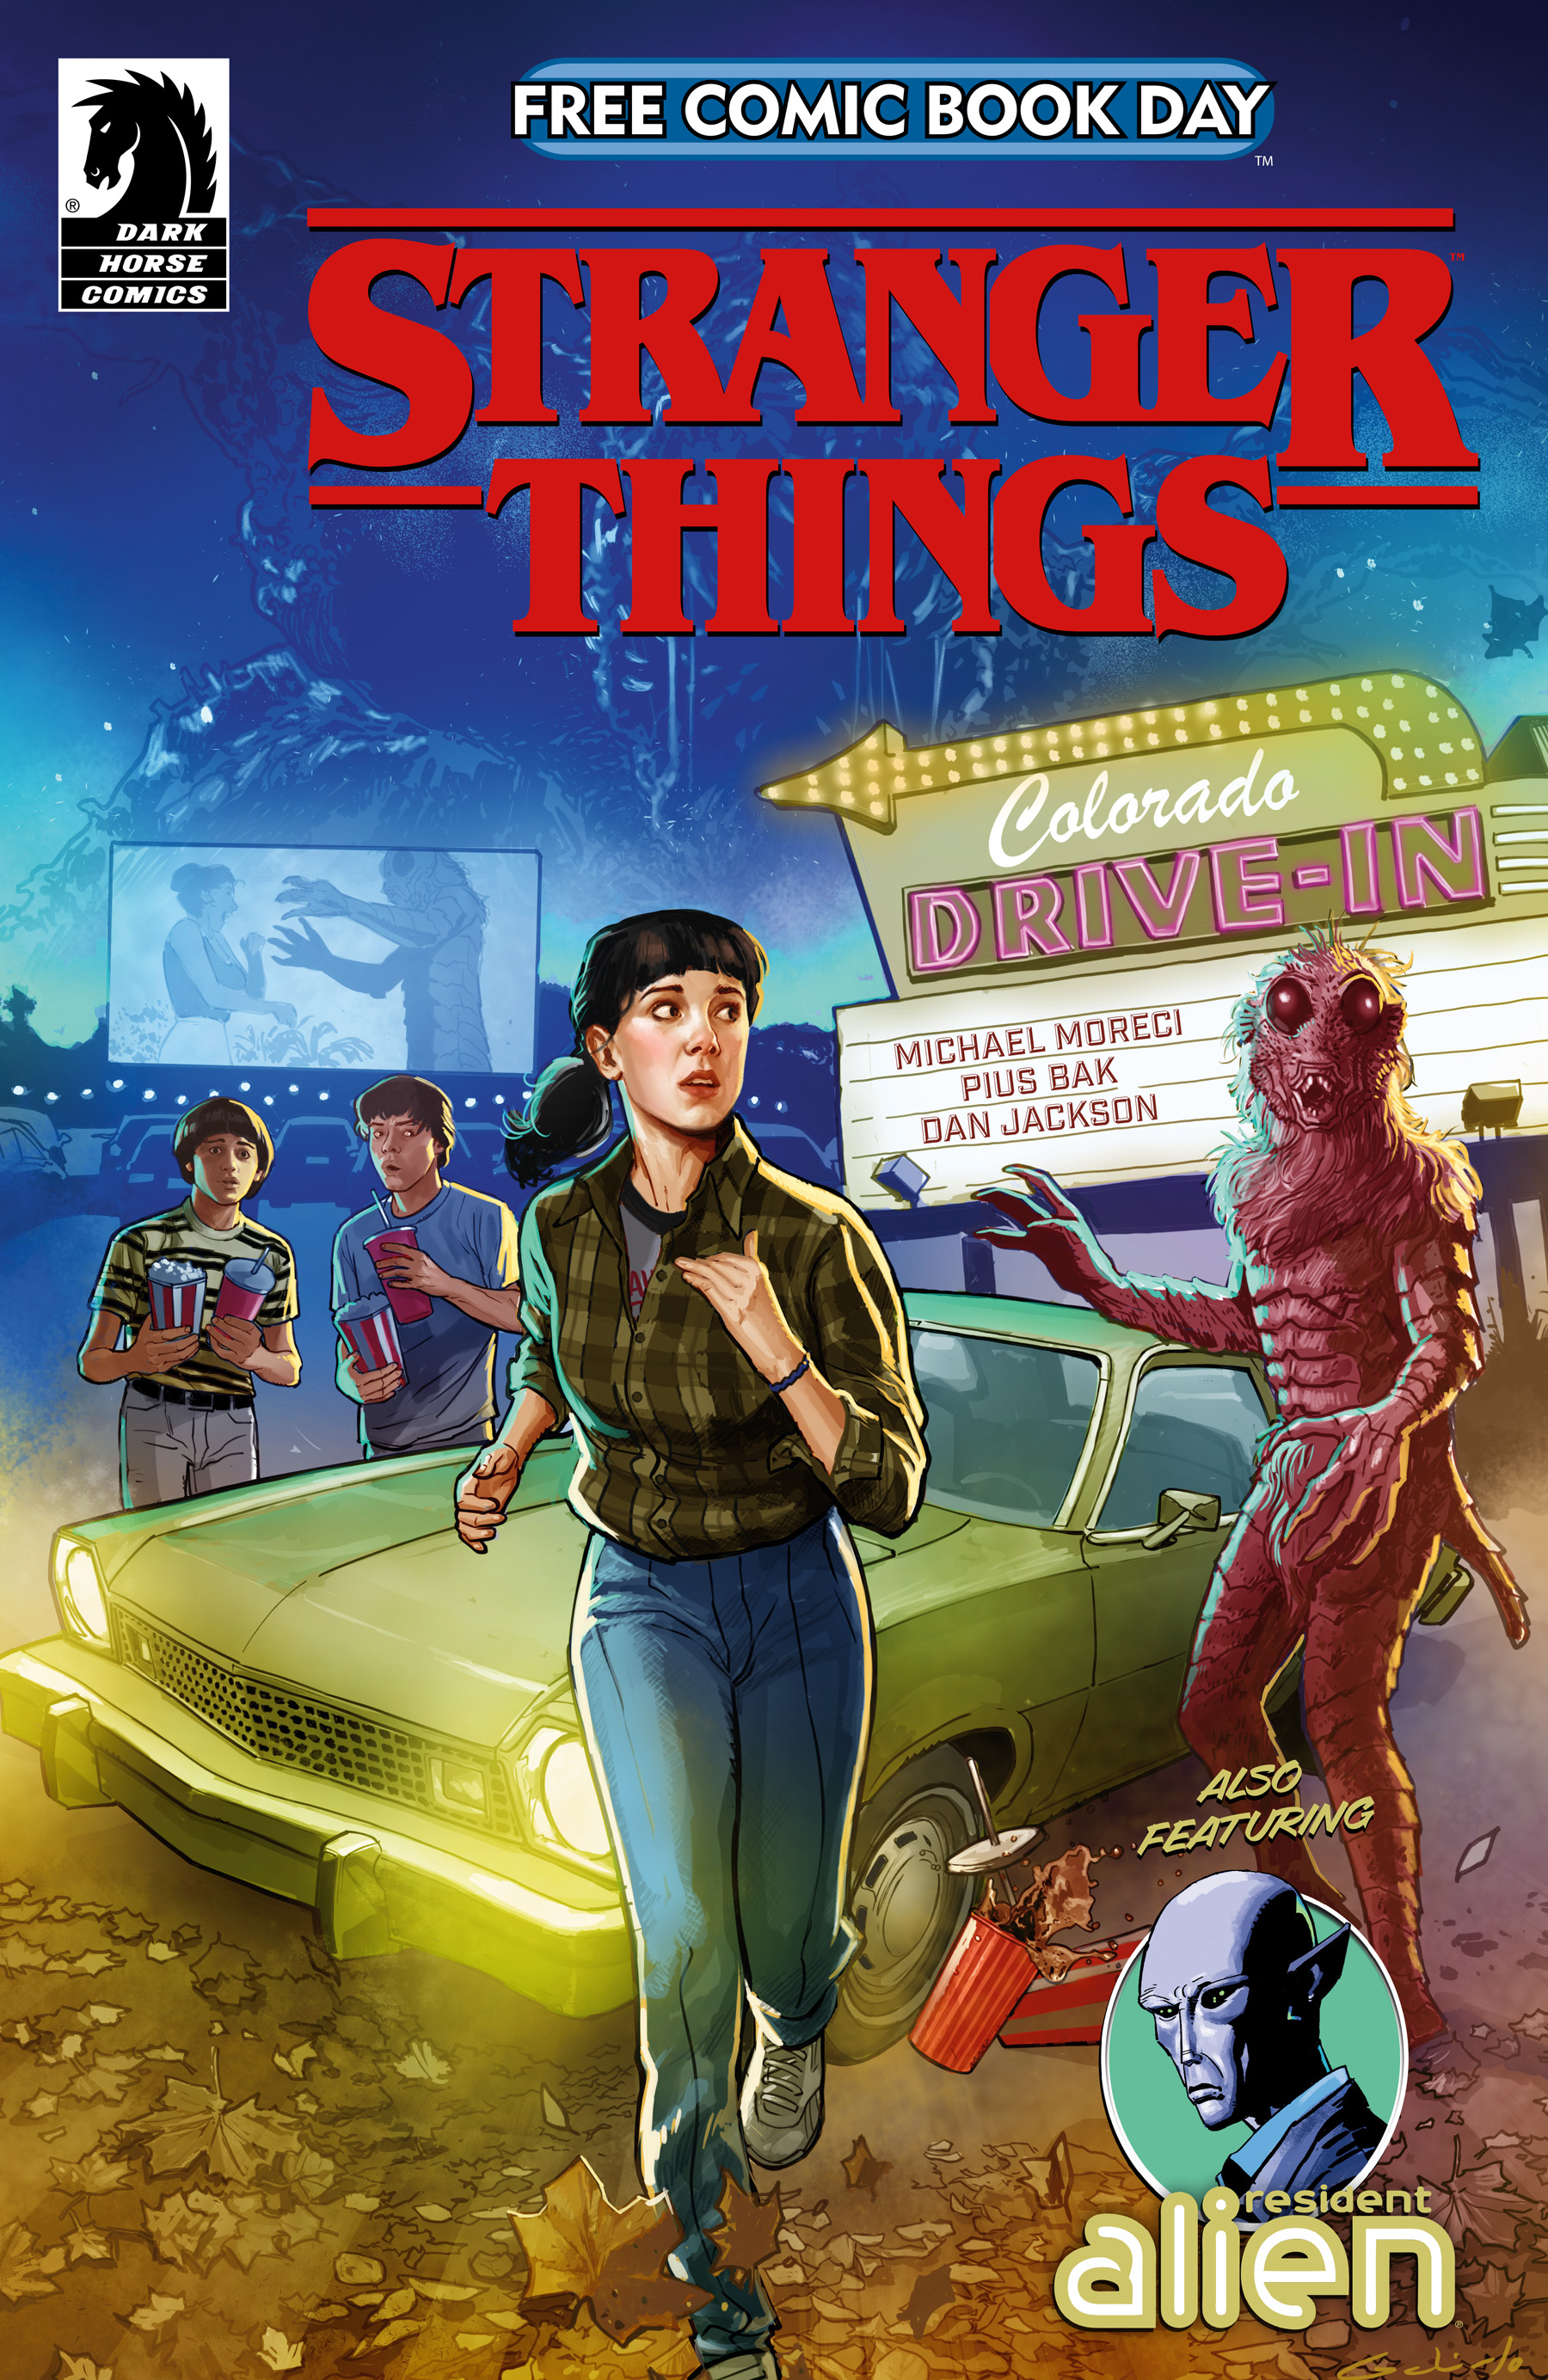 Read online Free Comic Book Day 2022 comic -  Issue # Stranger Things ft. Resident Alien - 1